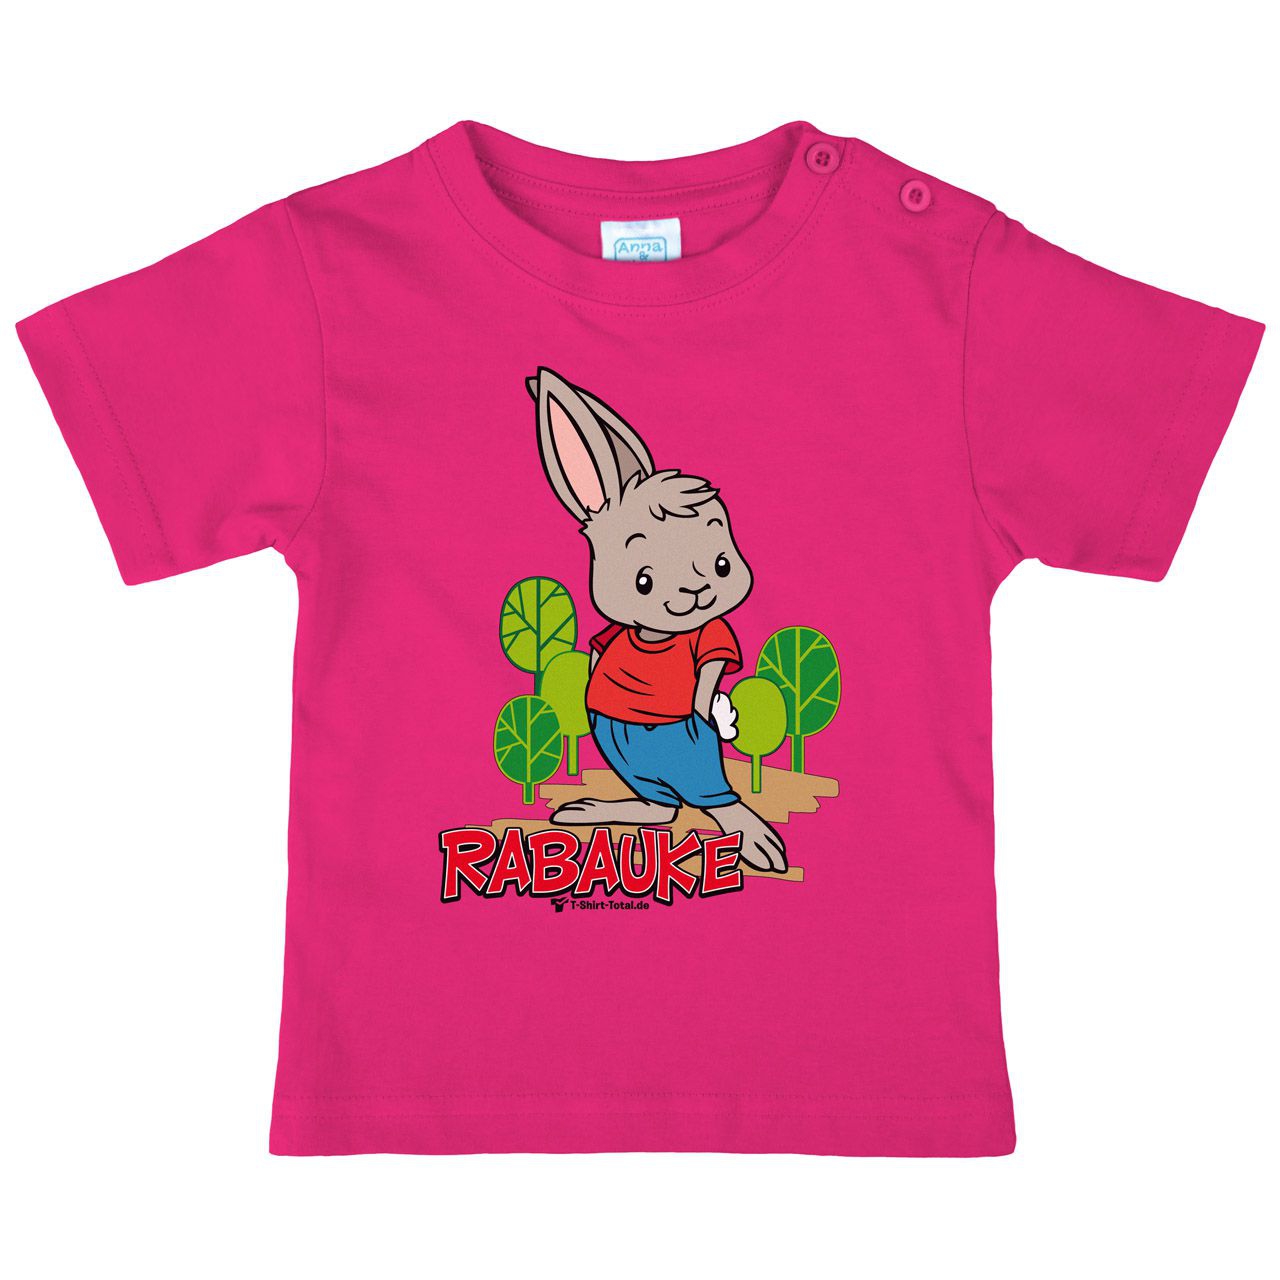 Rabauke Kinder T-Shirt pink 110 / 116